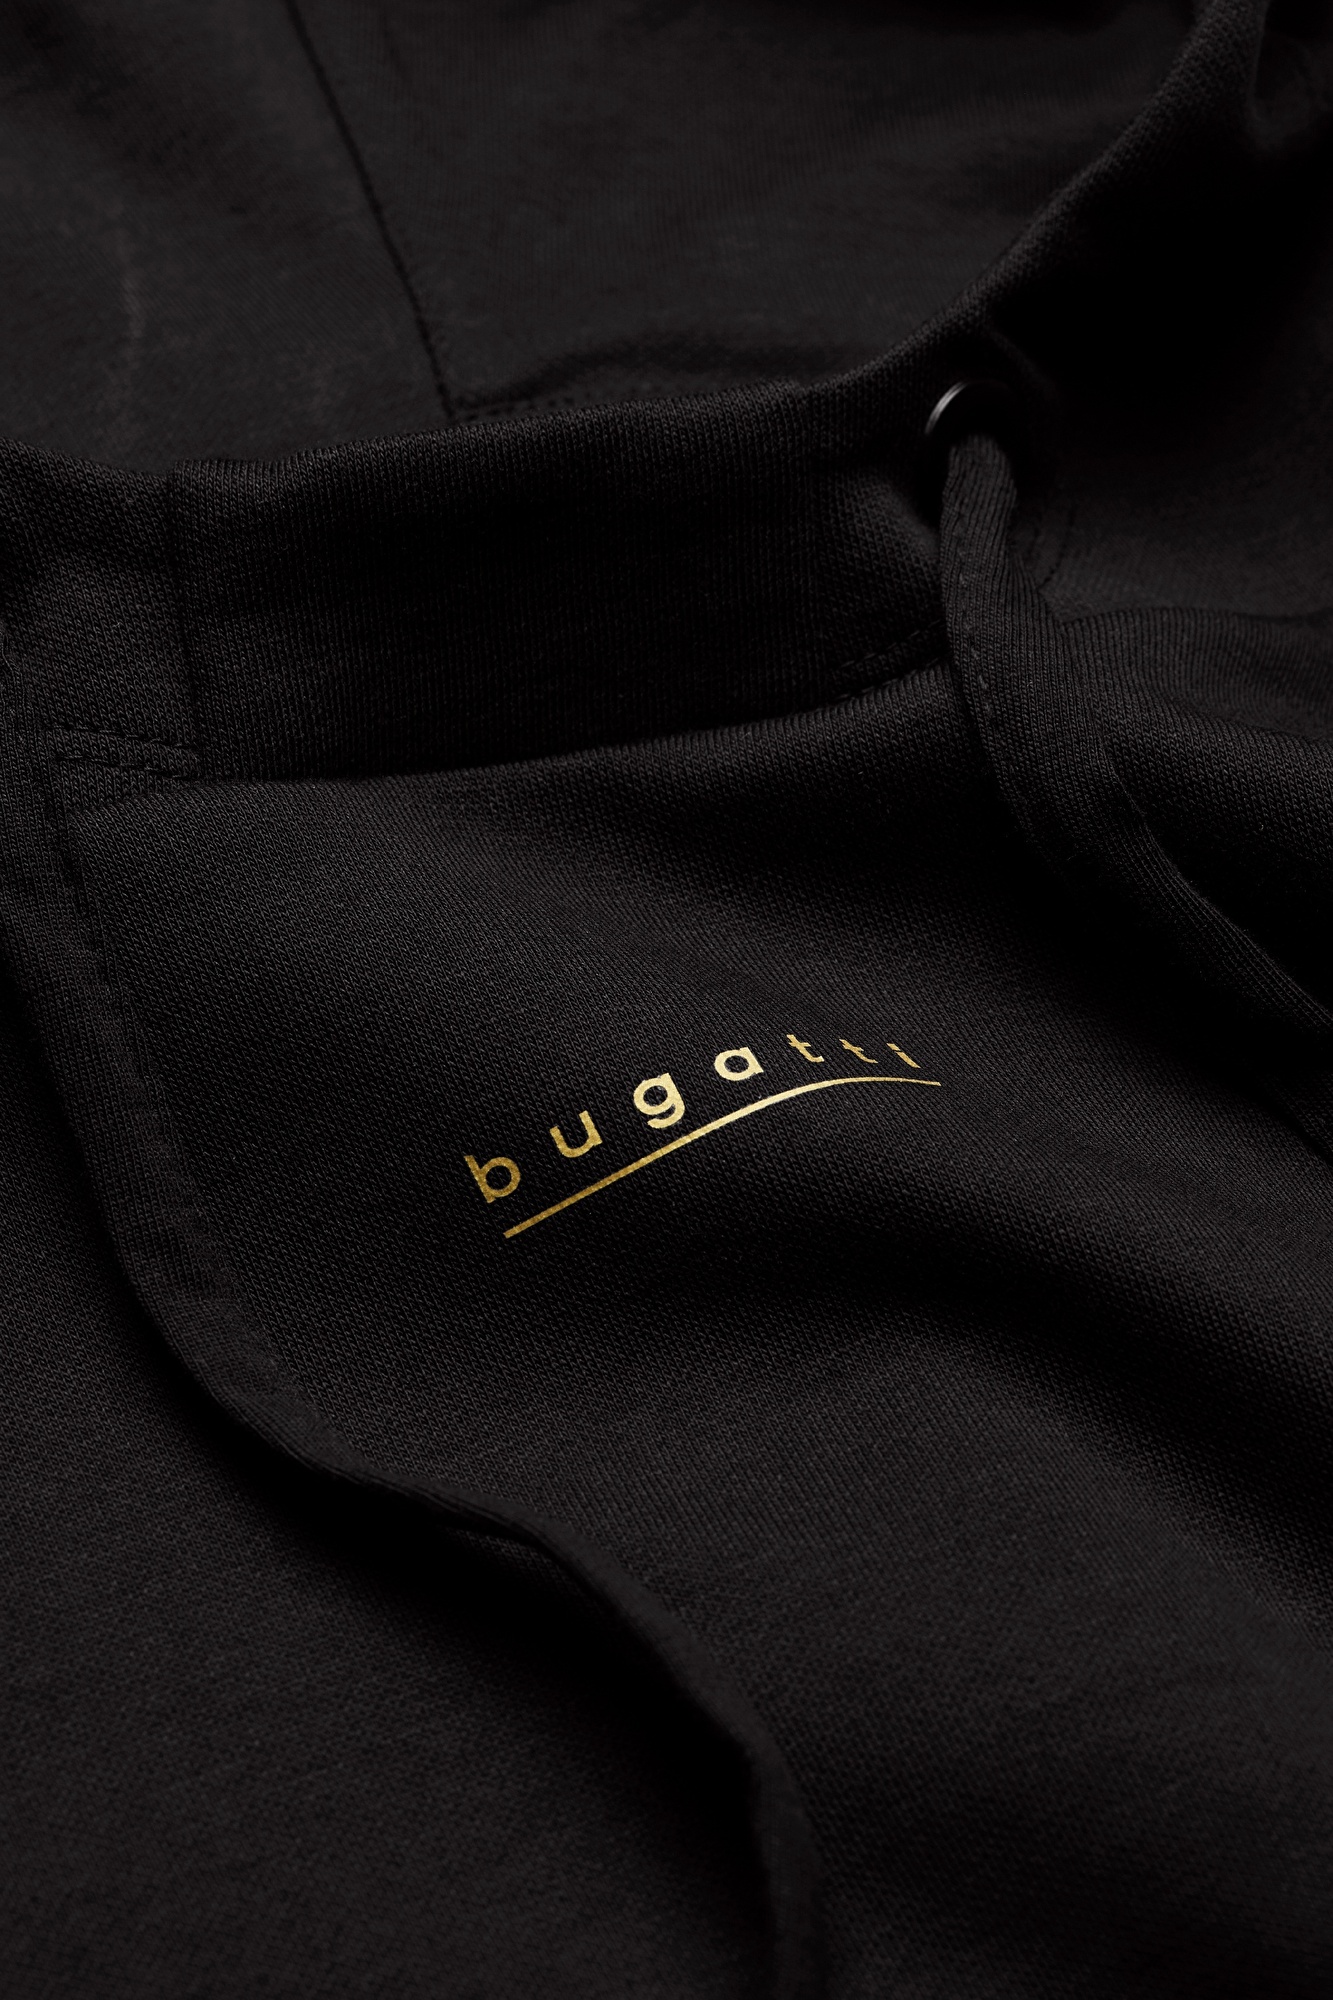 Hooded sweatshirt With small logo print in gold in black | bugatti